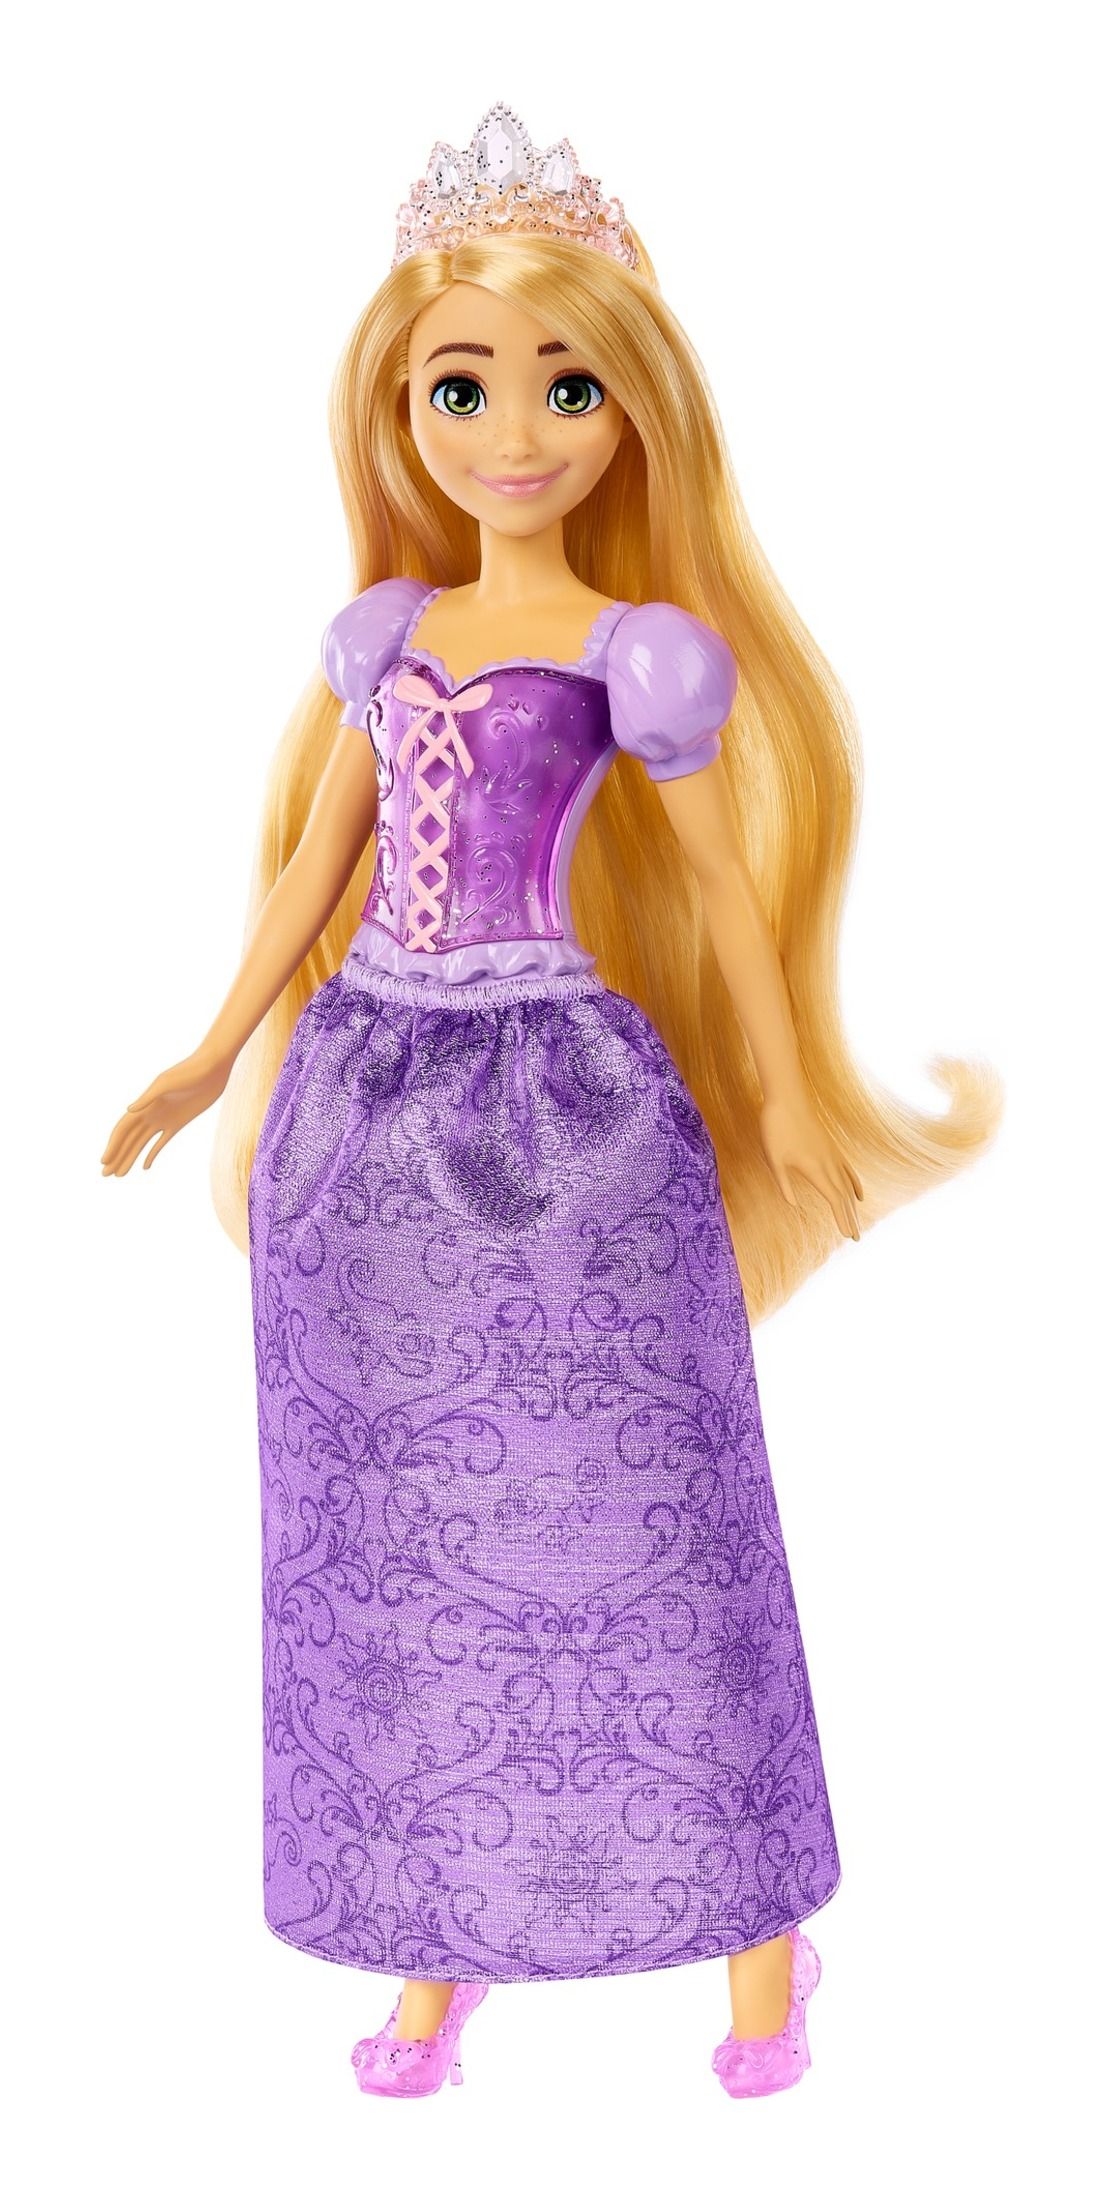 Disney Princess: Rapunzel Fashion Doll, Tangled